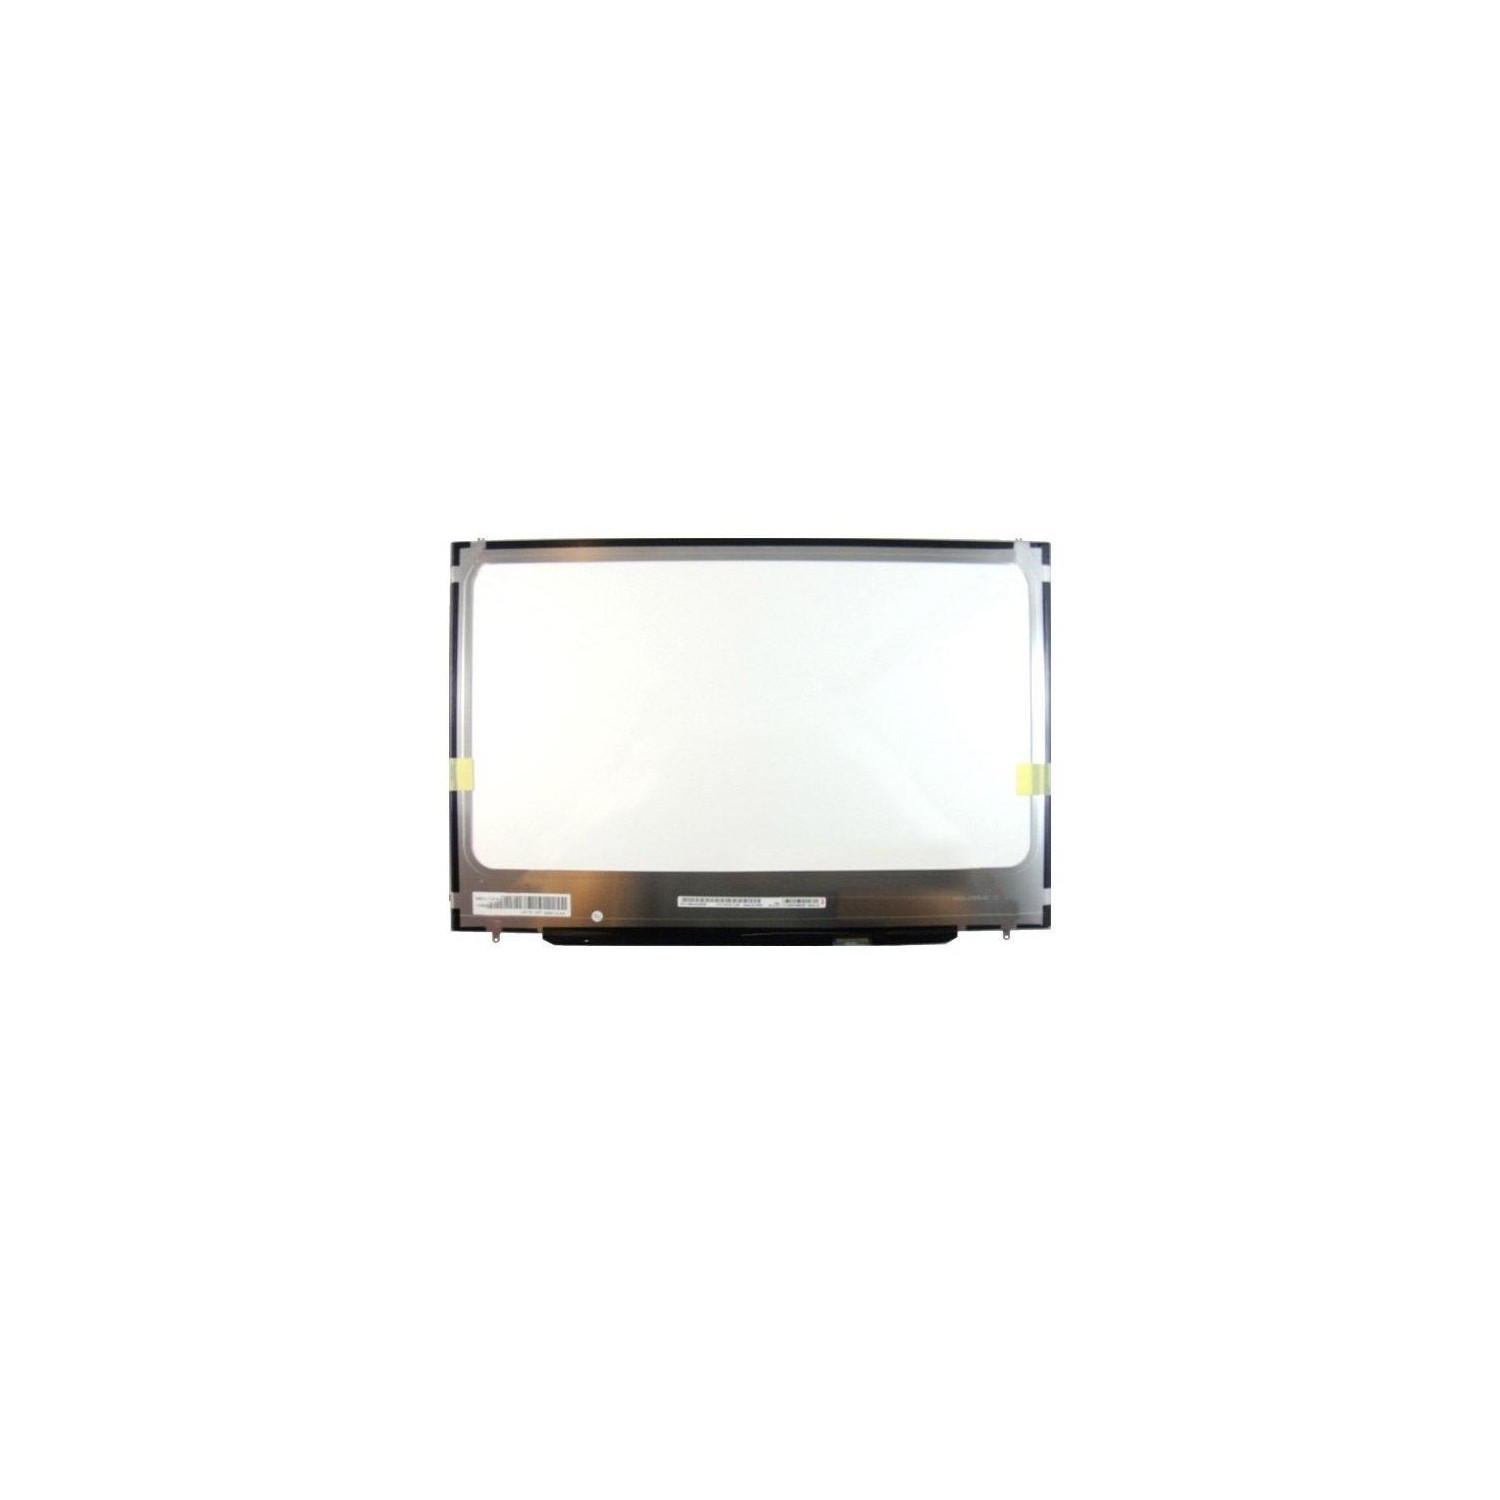 PANTALLA 17" LED SAMSUNG LTN170CT10-G01